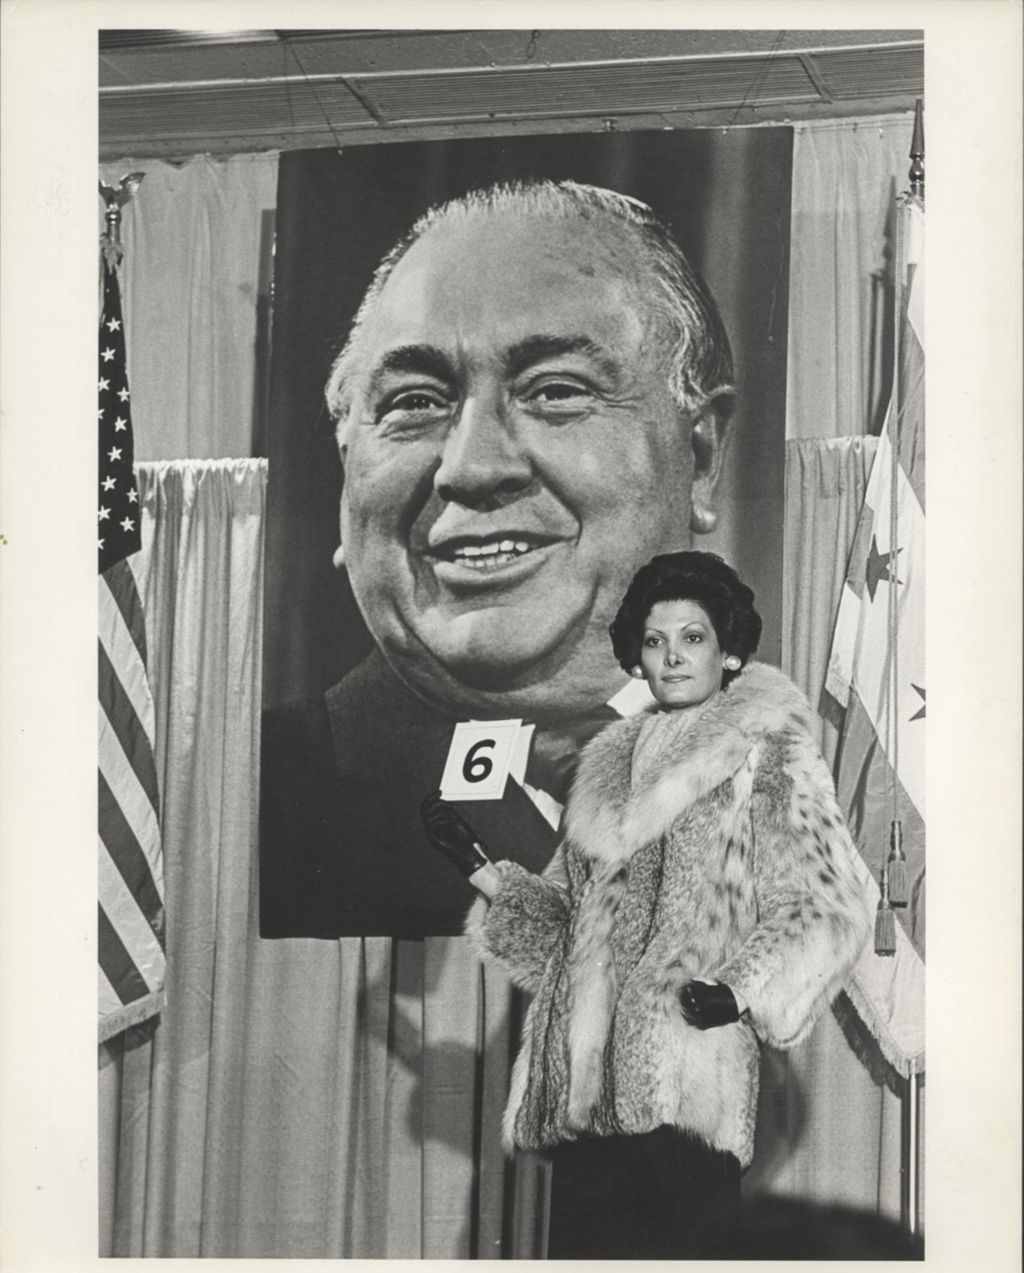 Woman modeling a fur coat in front of a Richard J. Daley portrait